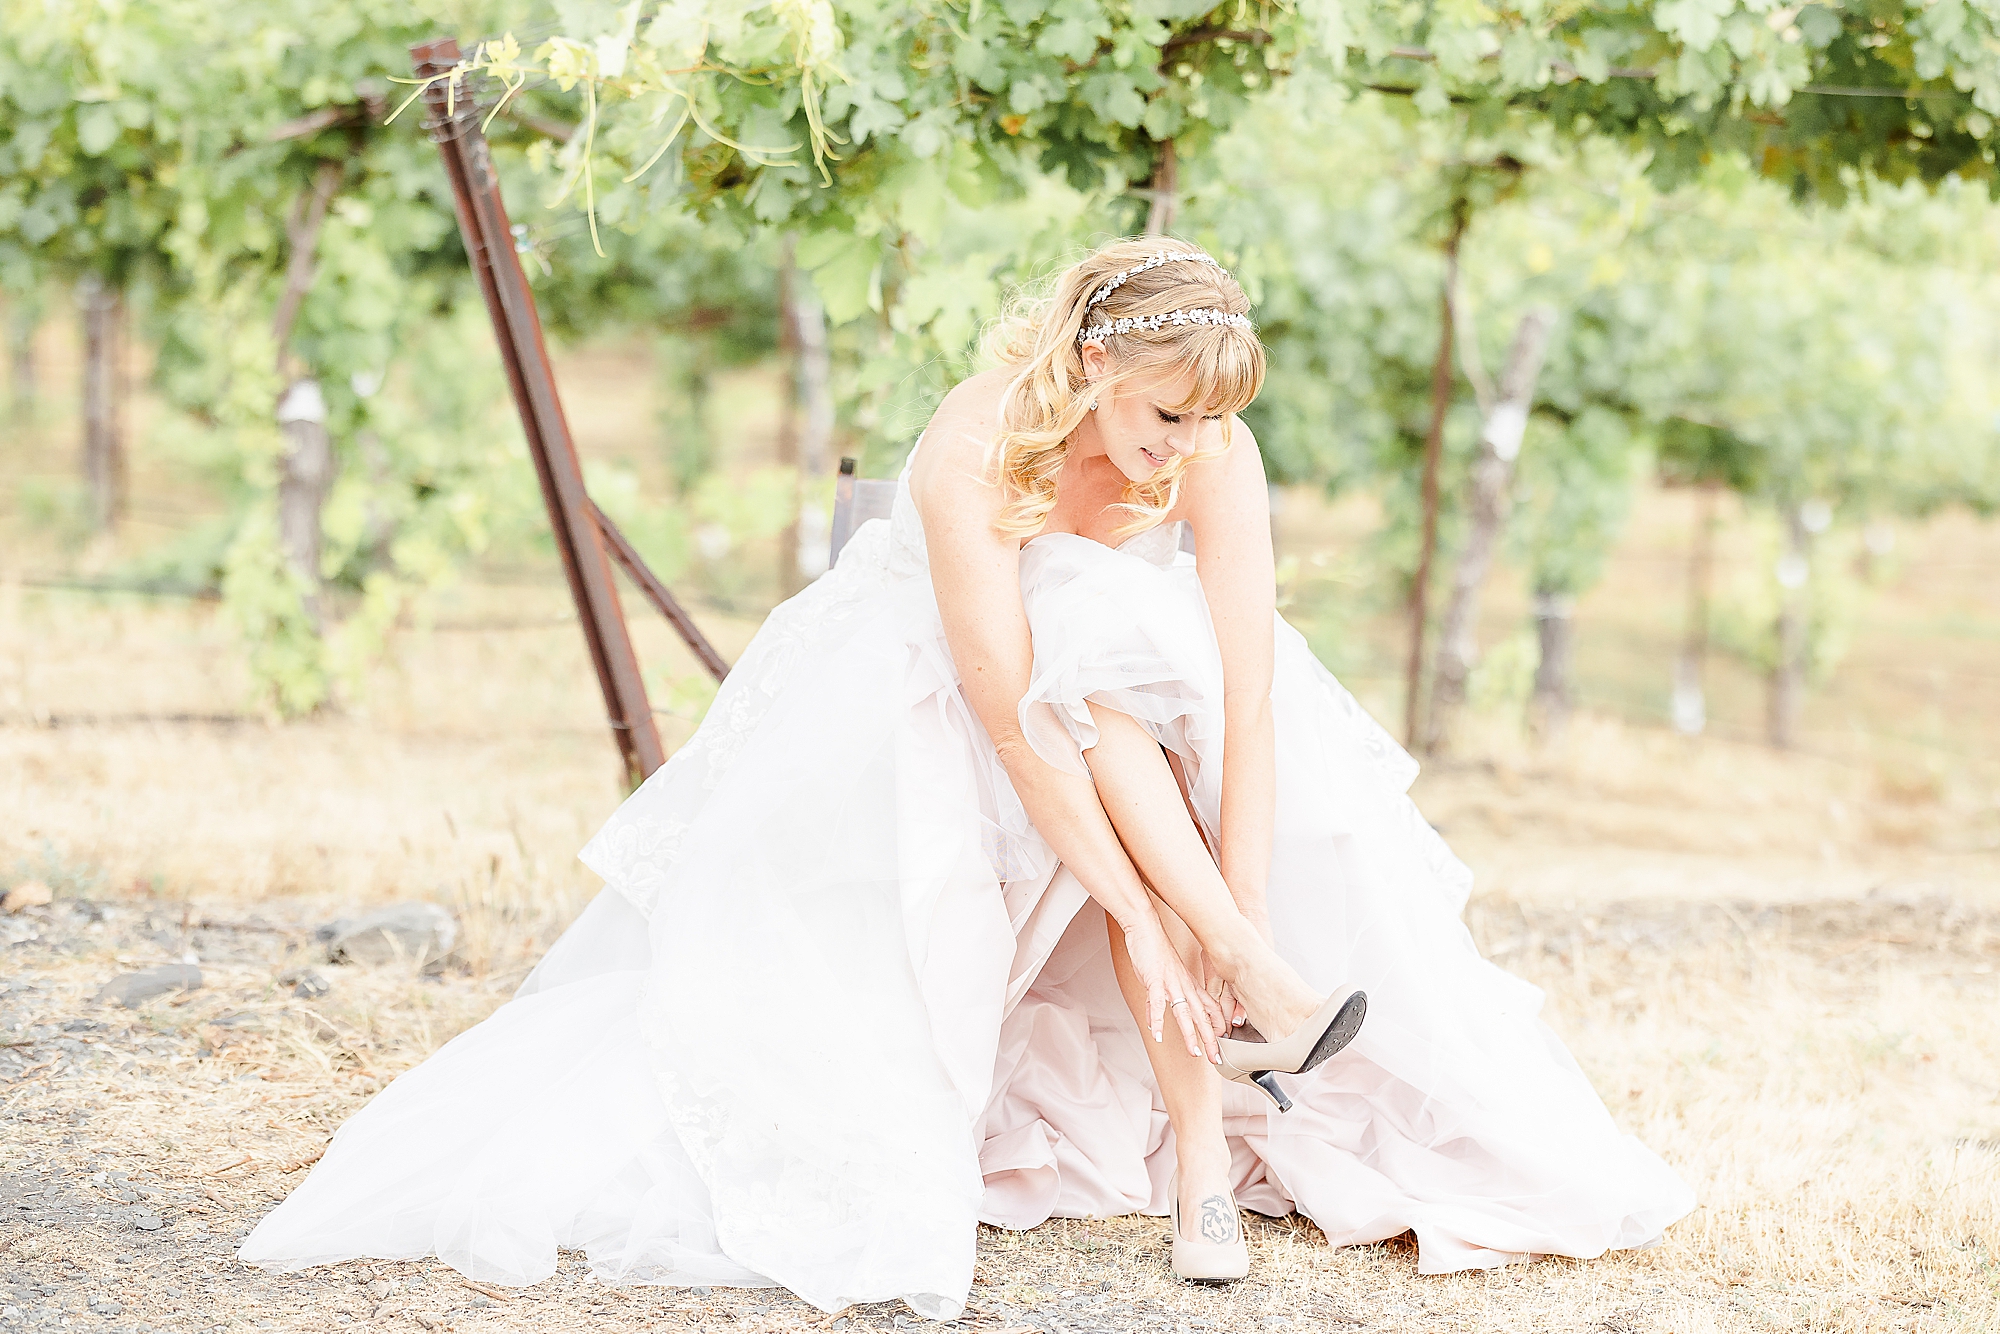 Wedding in a vineyard